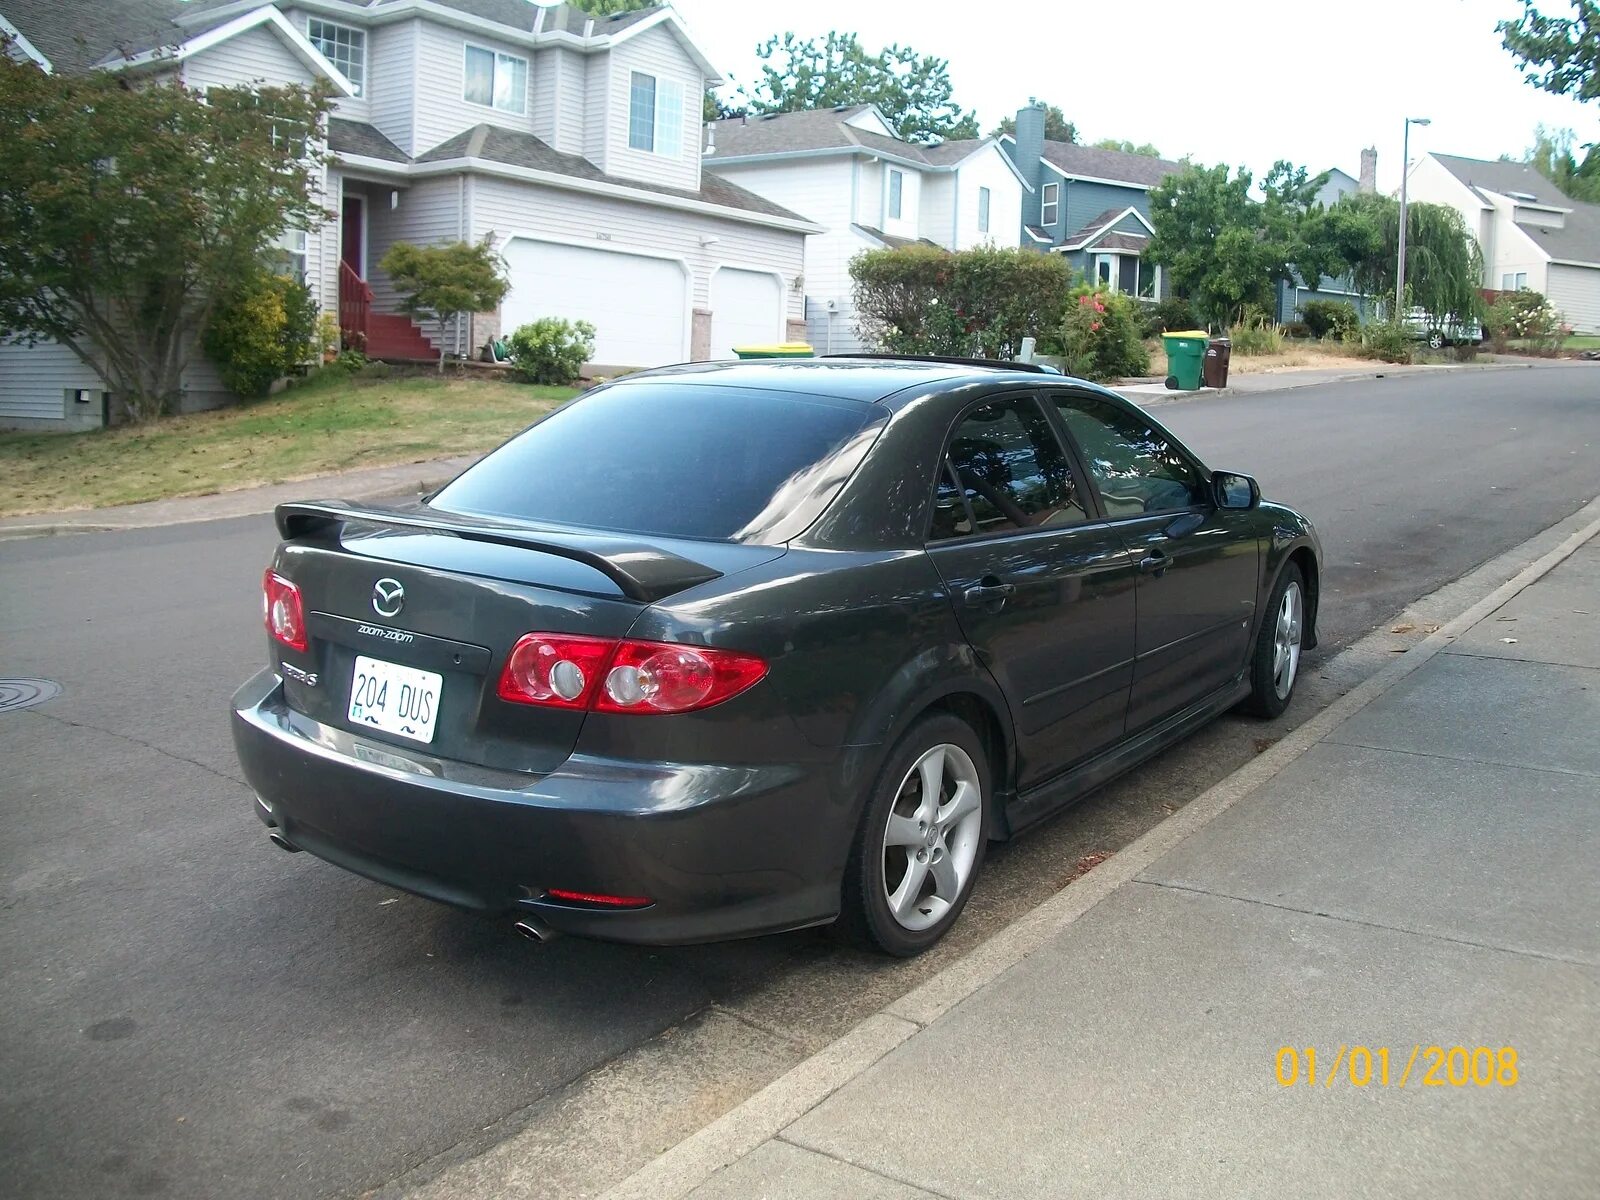 Мазда 6 2003 gg. Mazda 6 gg американка. Мазда Мазда 6 2003. Мазда 6 2003 американка. Мазда 6 gg 2.3 американка.